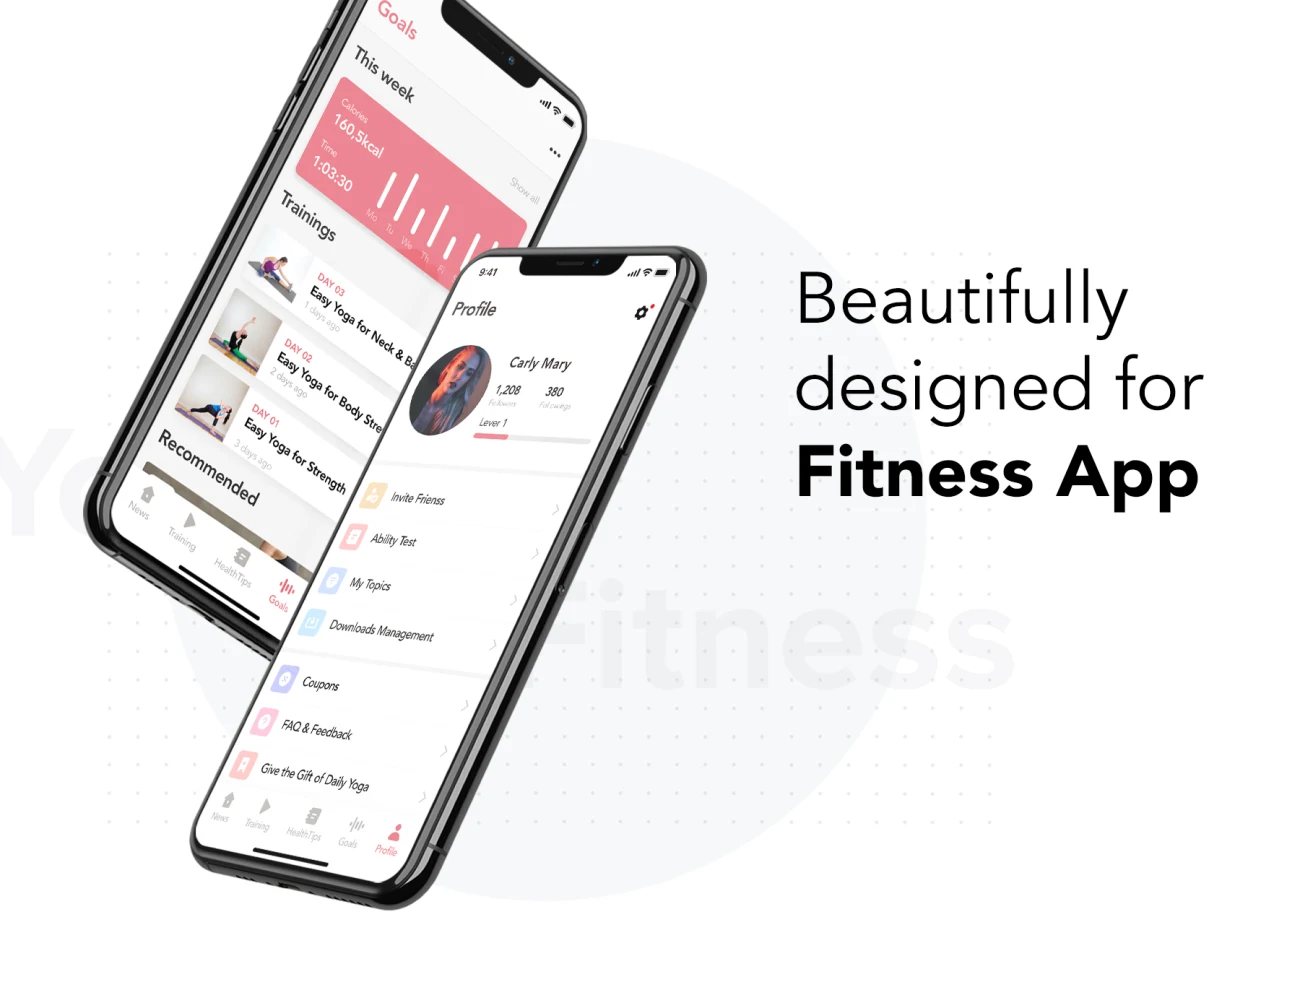 Yoga Fitness Mobile App UI Kit — new 瑜伽健身移动应用程序用户界面套件-新插图5